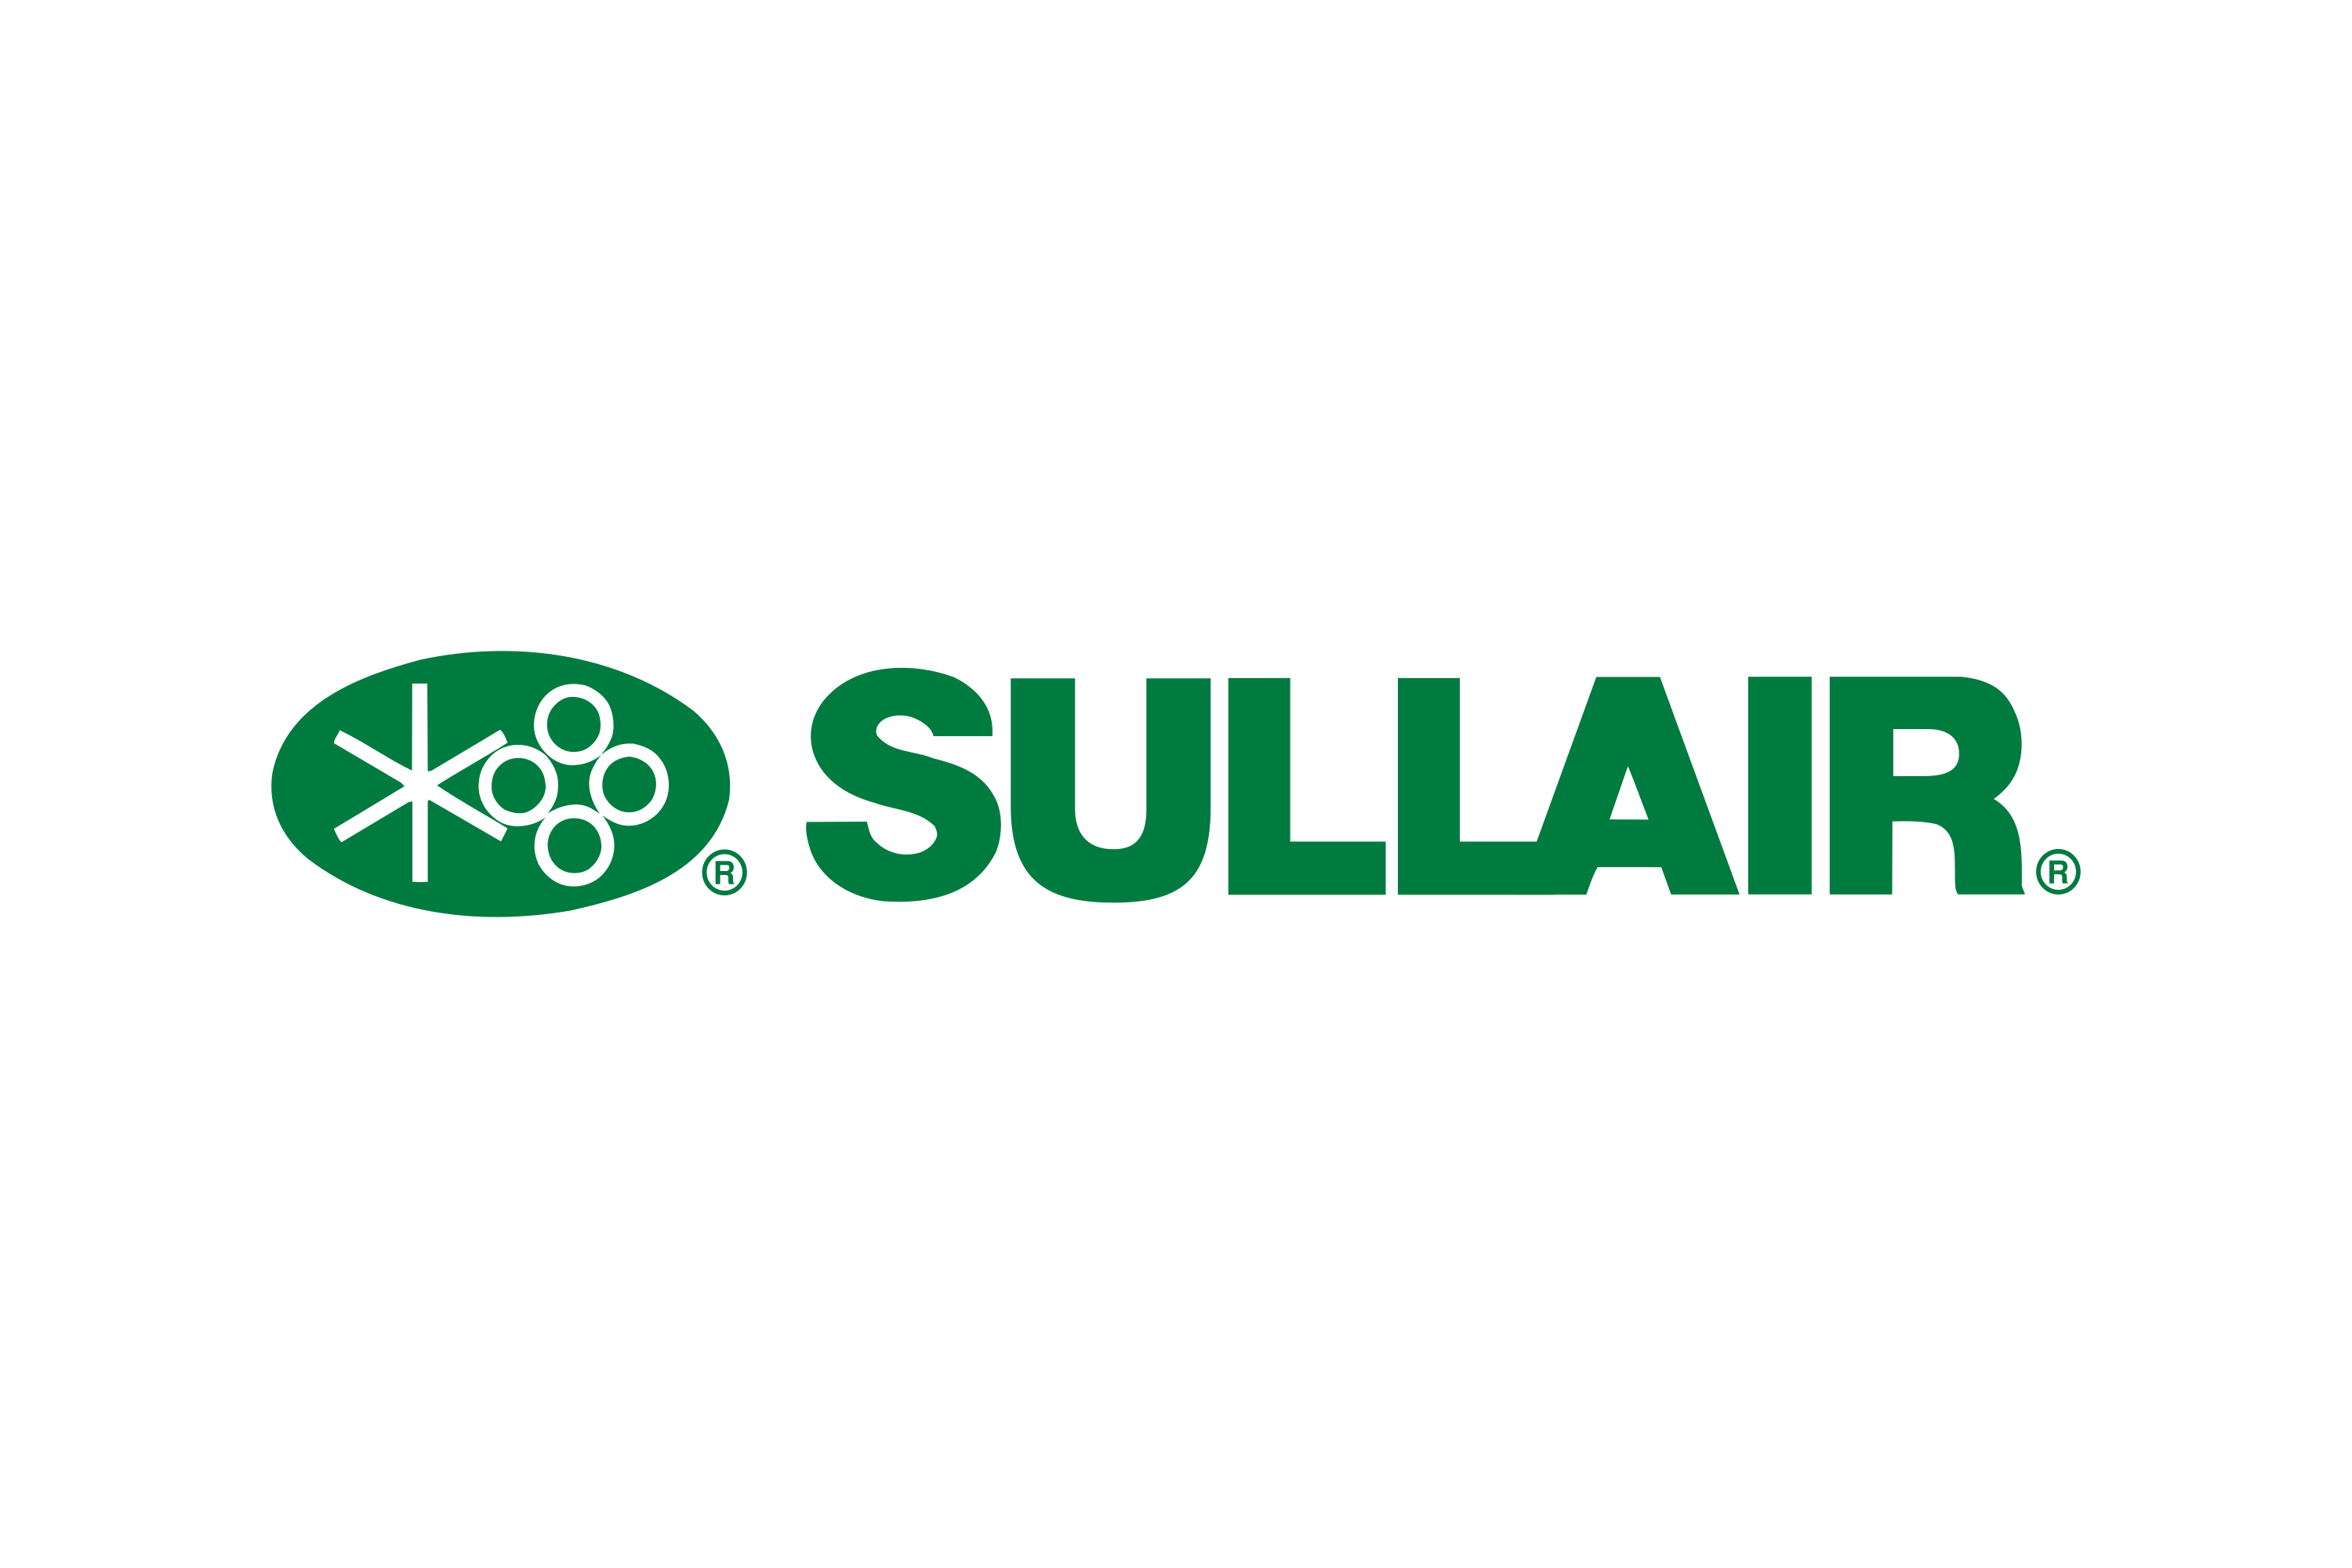 Sullair-Logo.png